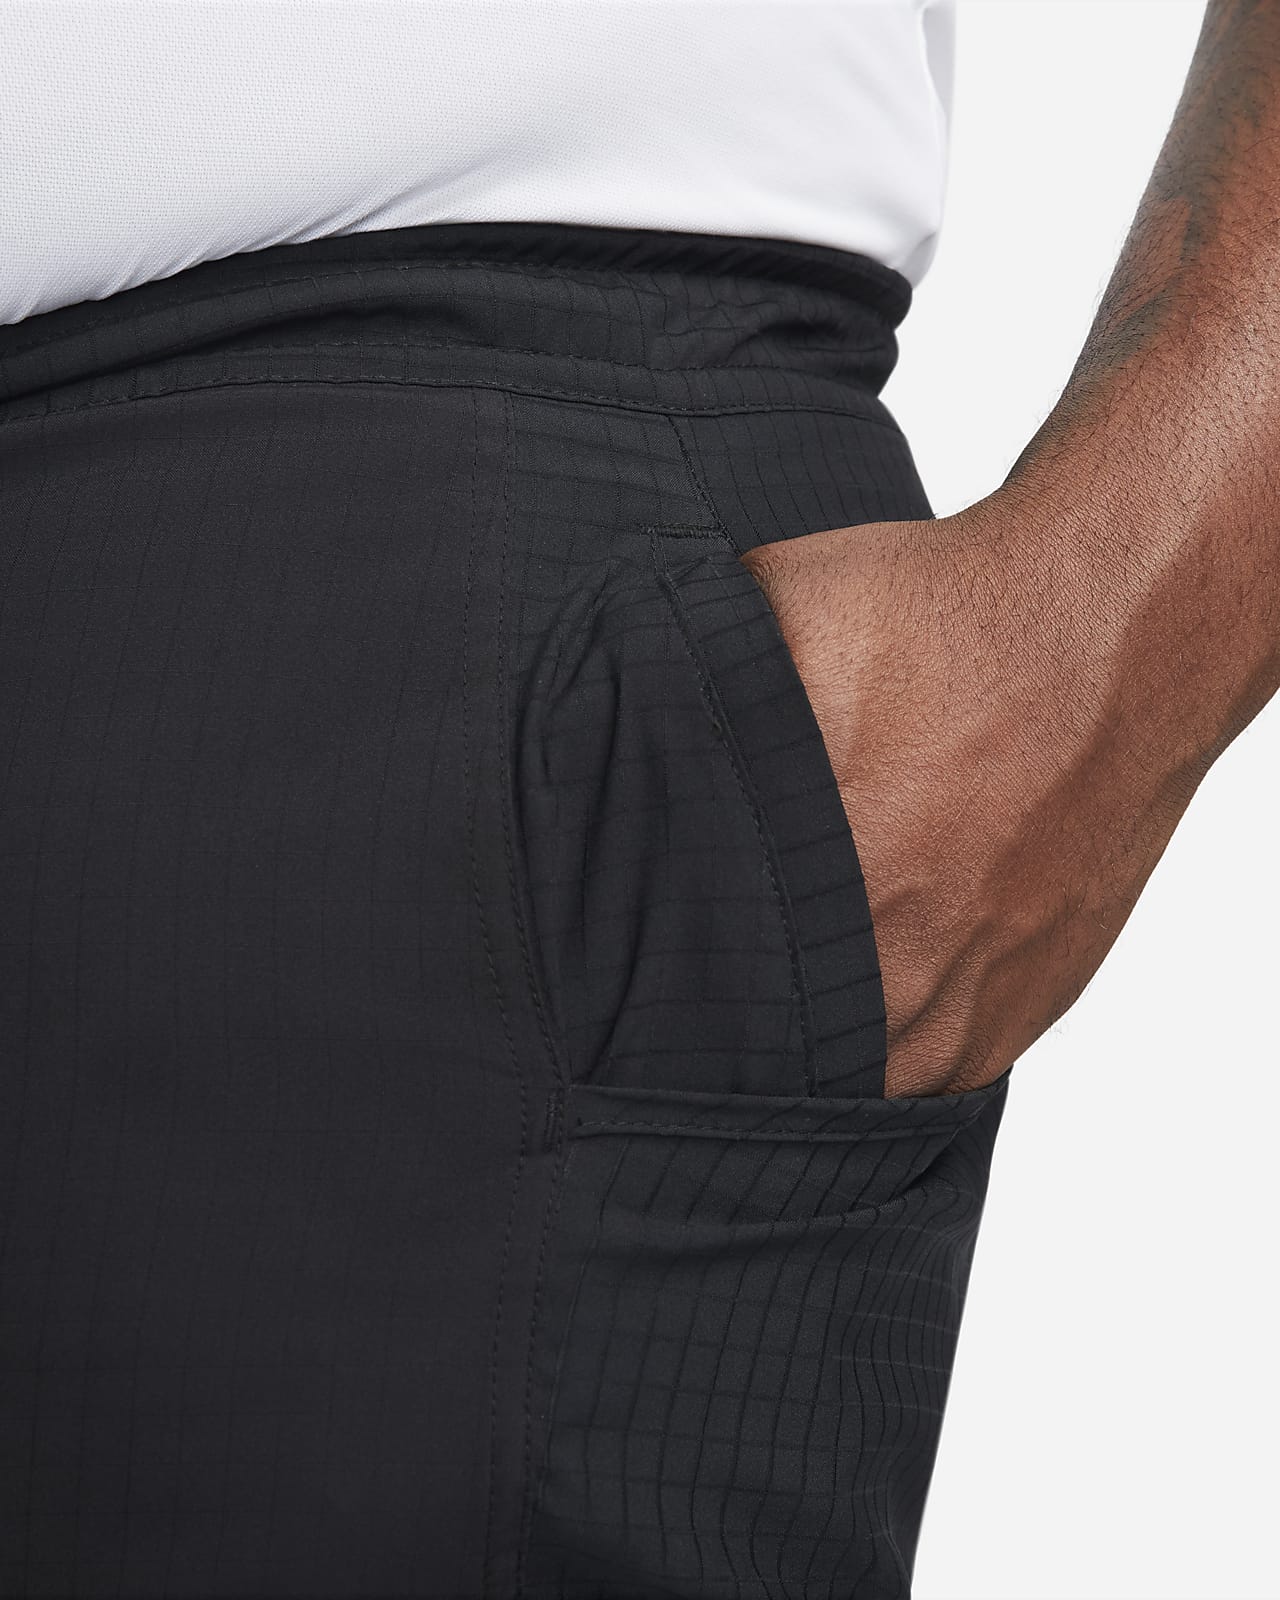 Nike – Tagged Gear_Tights & Pants – Dynamic Sports